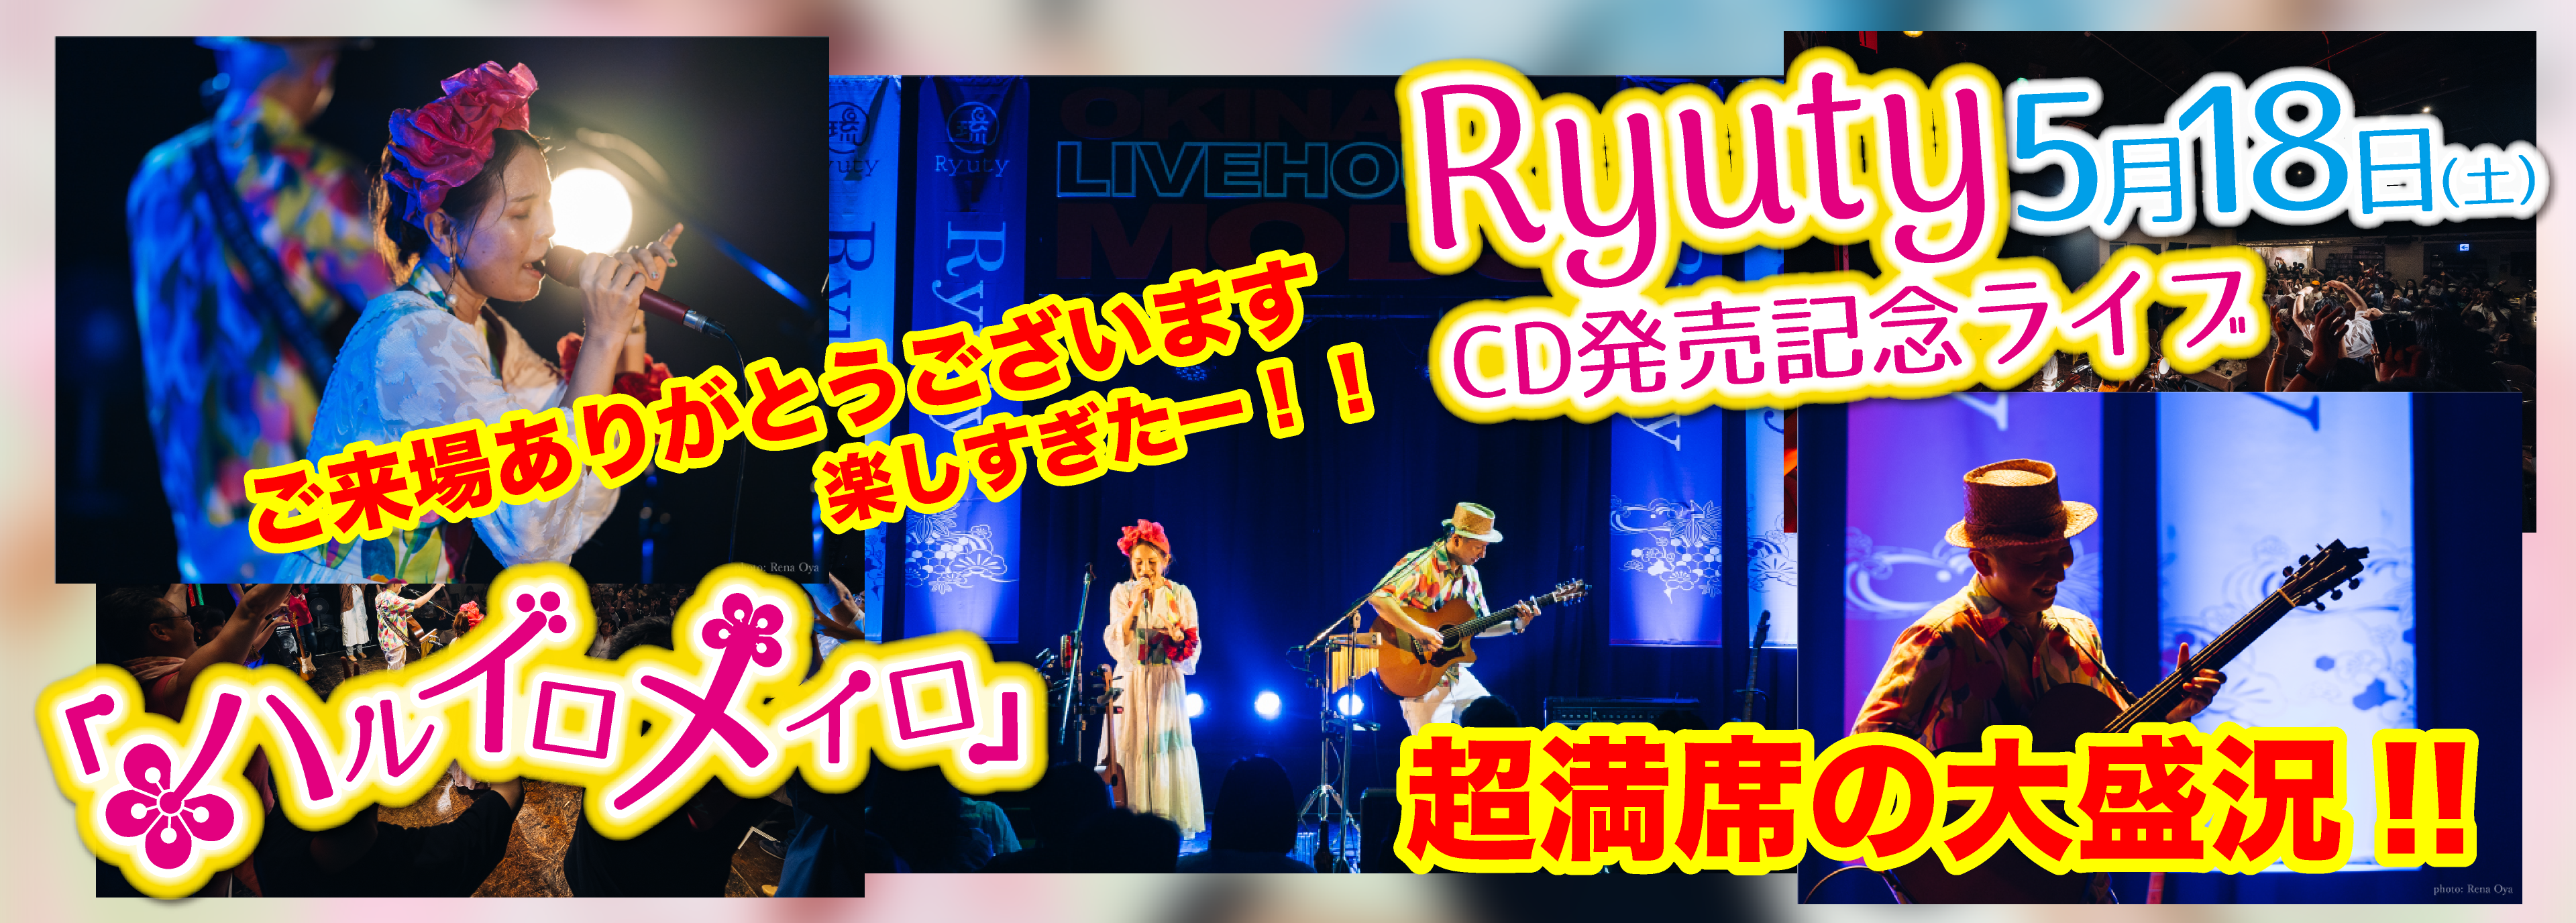 Ryuty Official Site：トップニュース